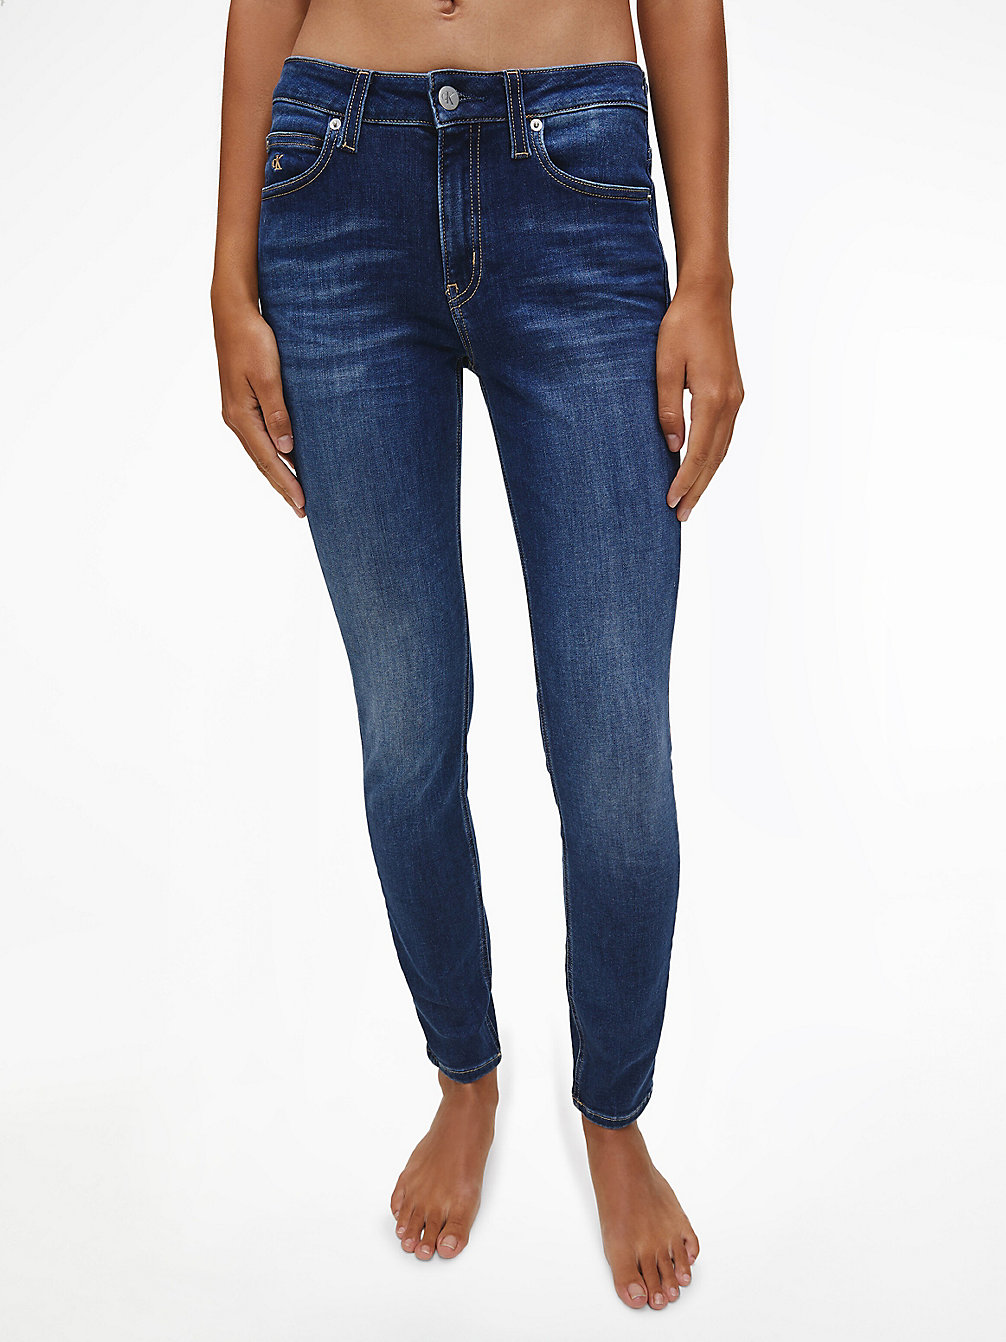 ZZ001 MID BLUE Mid Rise Skinny Jeans undefined women Calvin Klein